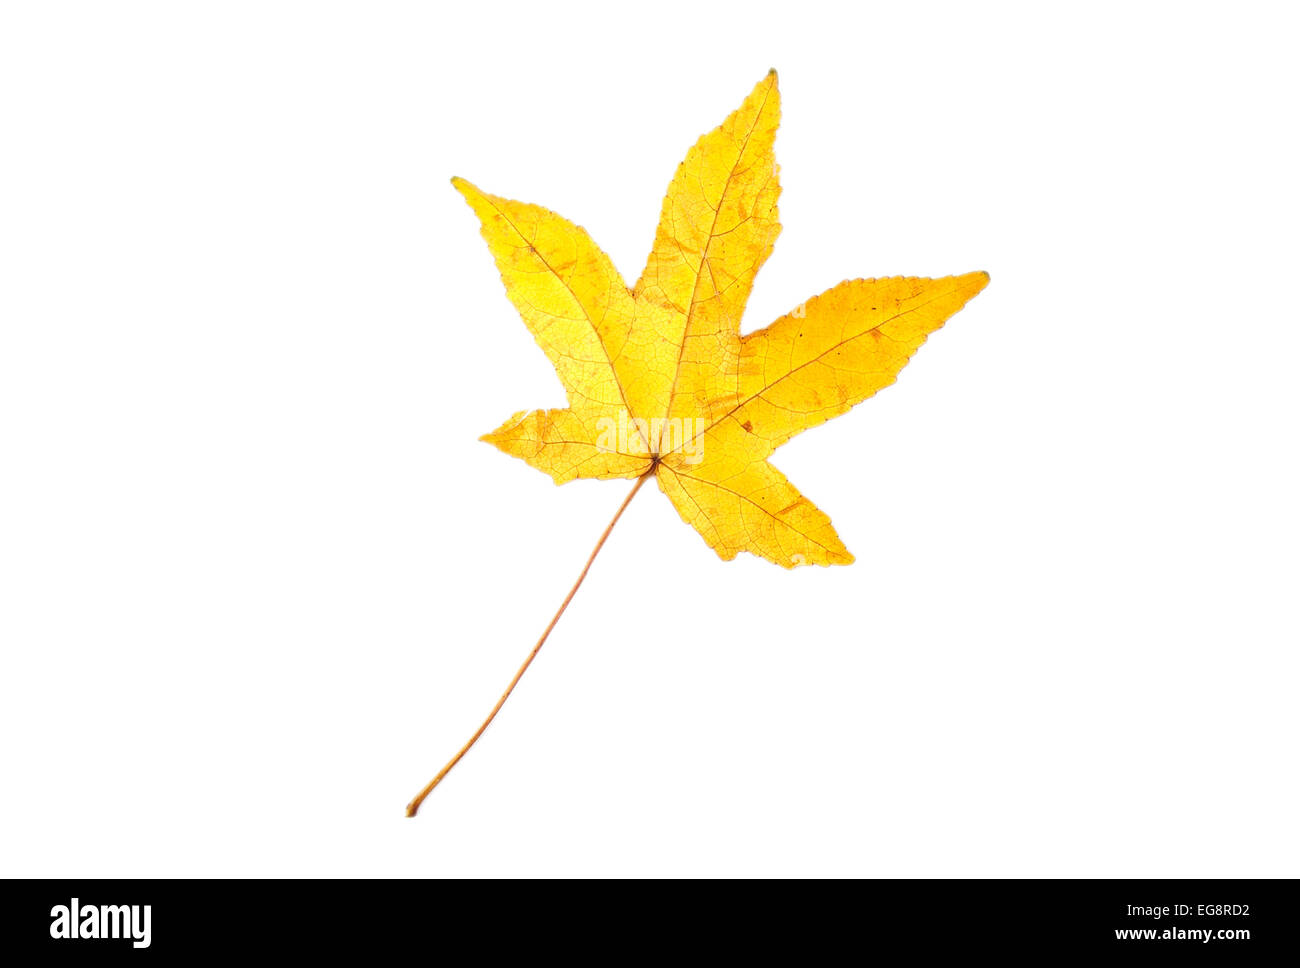 Yellow autumn leaf isolated on white background Stock Photo